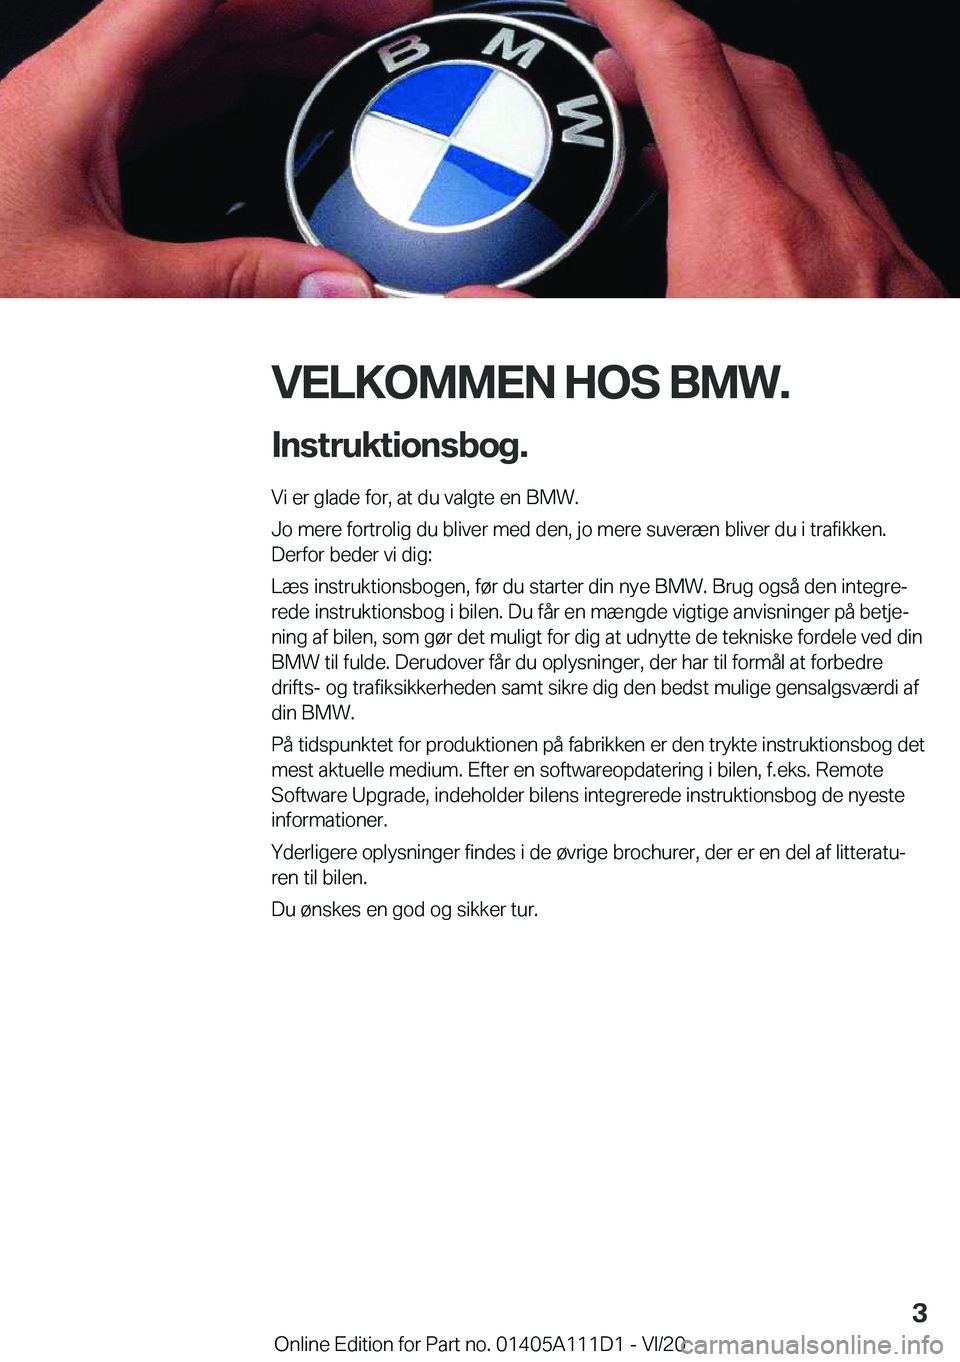 BMW 3 SERIES SEDAN PLUG-IN HYBRID 2021  InstruktionsbØger (in Danish) �V�E�L�K�O�M�M�E�N��H�O�S��B�M�W�.
�I�n�s�t�r�u�k�t�i�o�n�s�b�o�g�. �V�i��e�r��g�l�a�d�e��f�o�r�,��a�t��d�u��v�a�l�g�t�e��e�n��B�M�W�.
�J�o��m�e�r�e��f�o�r�t�r�o�l�i�g��d�u��b�l�i�v�e�r�